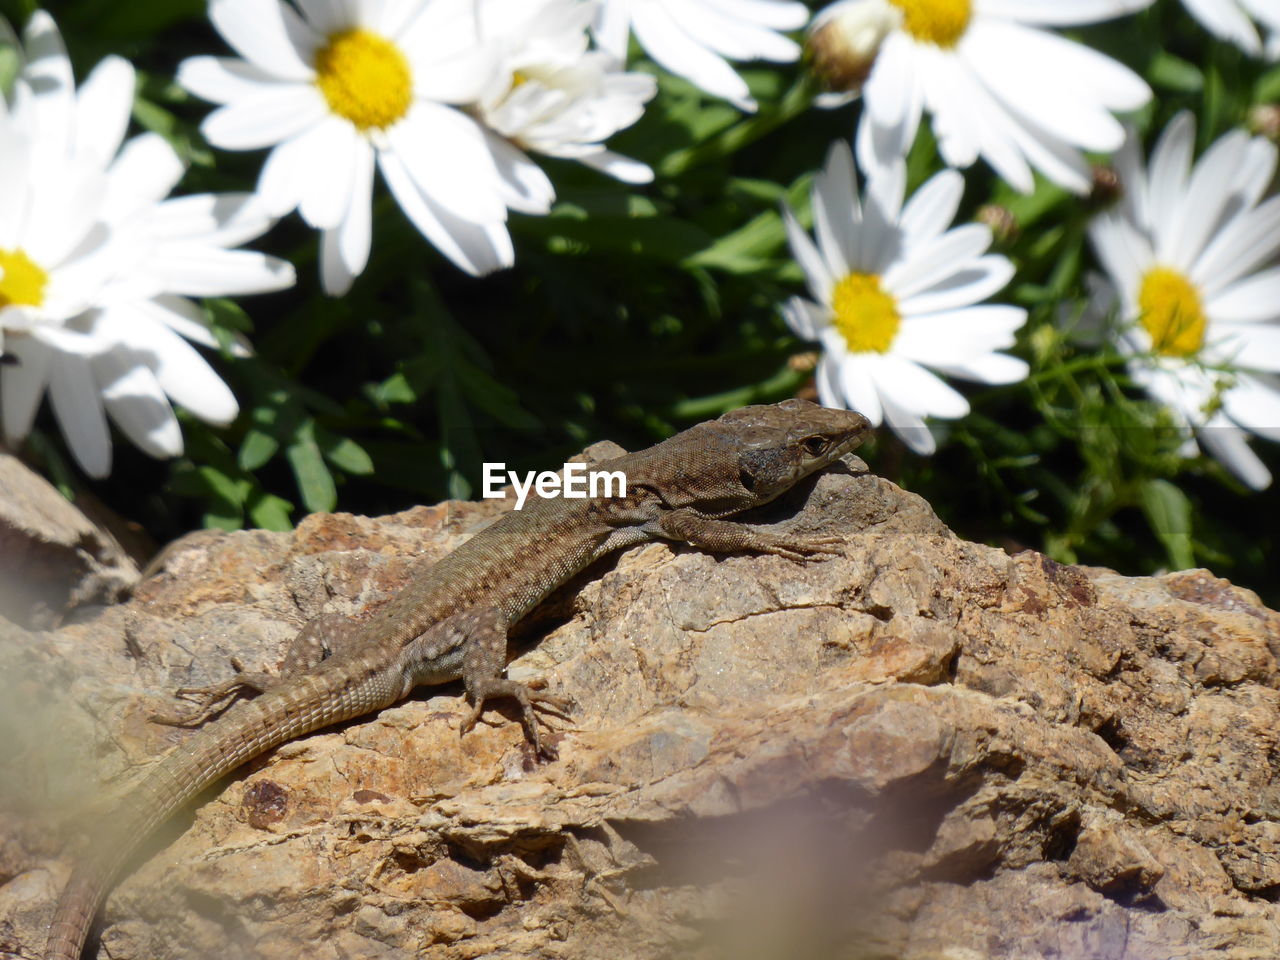 Close-up of lizard on flower